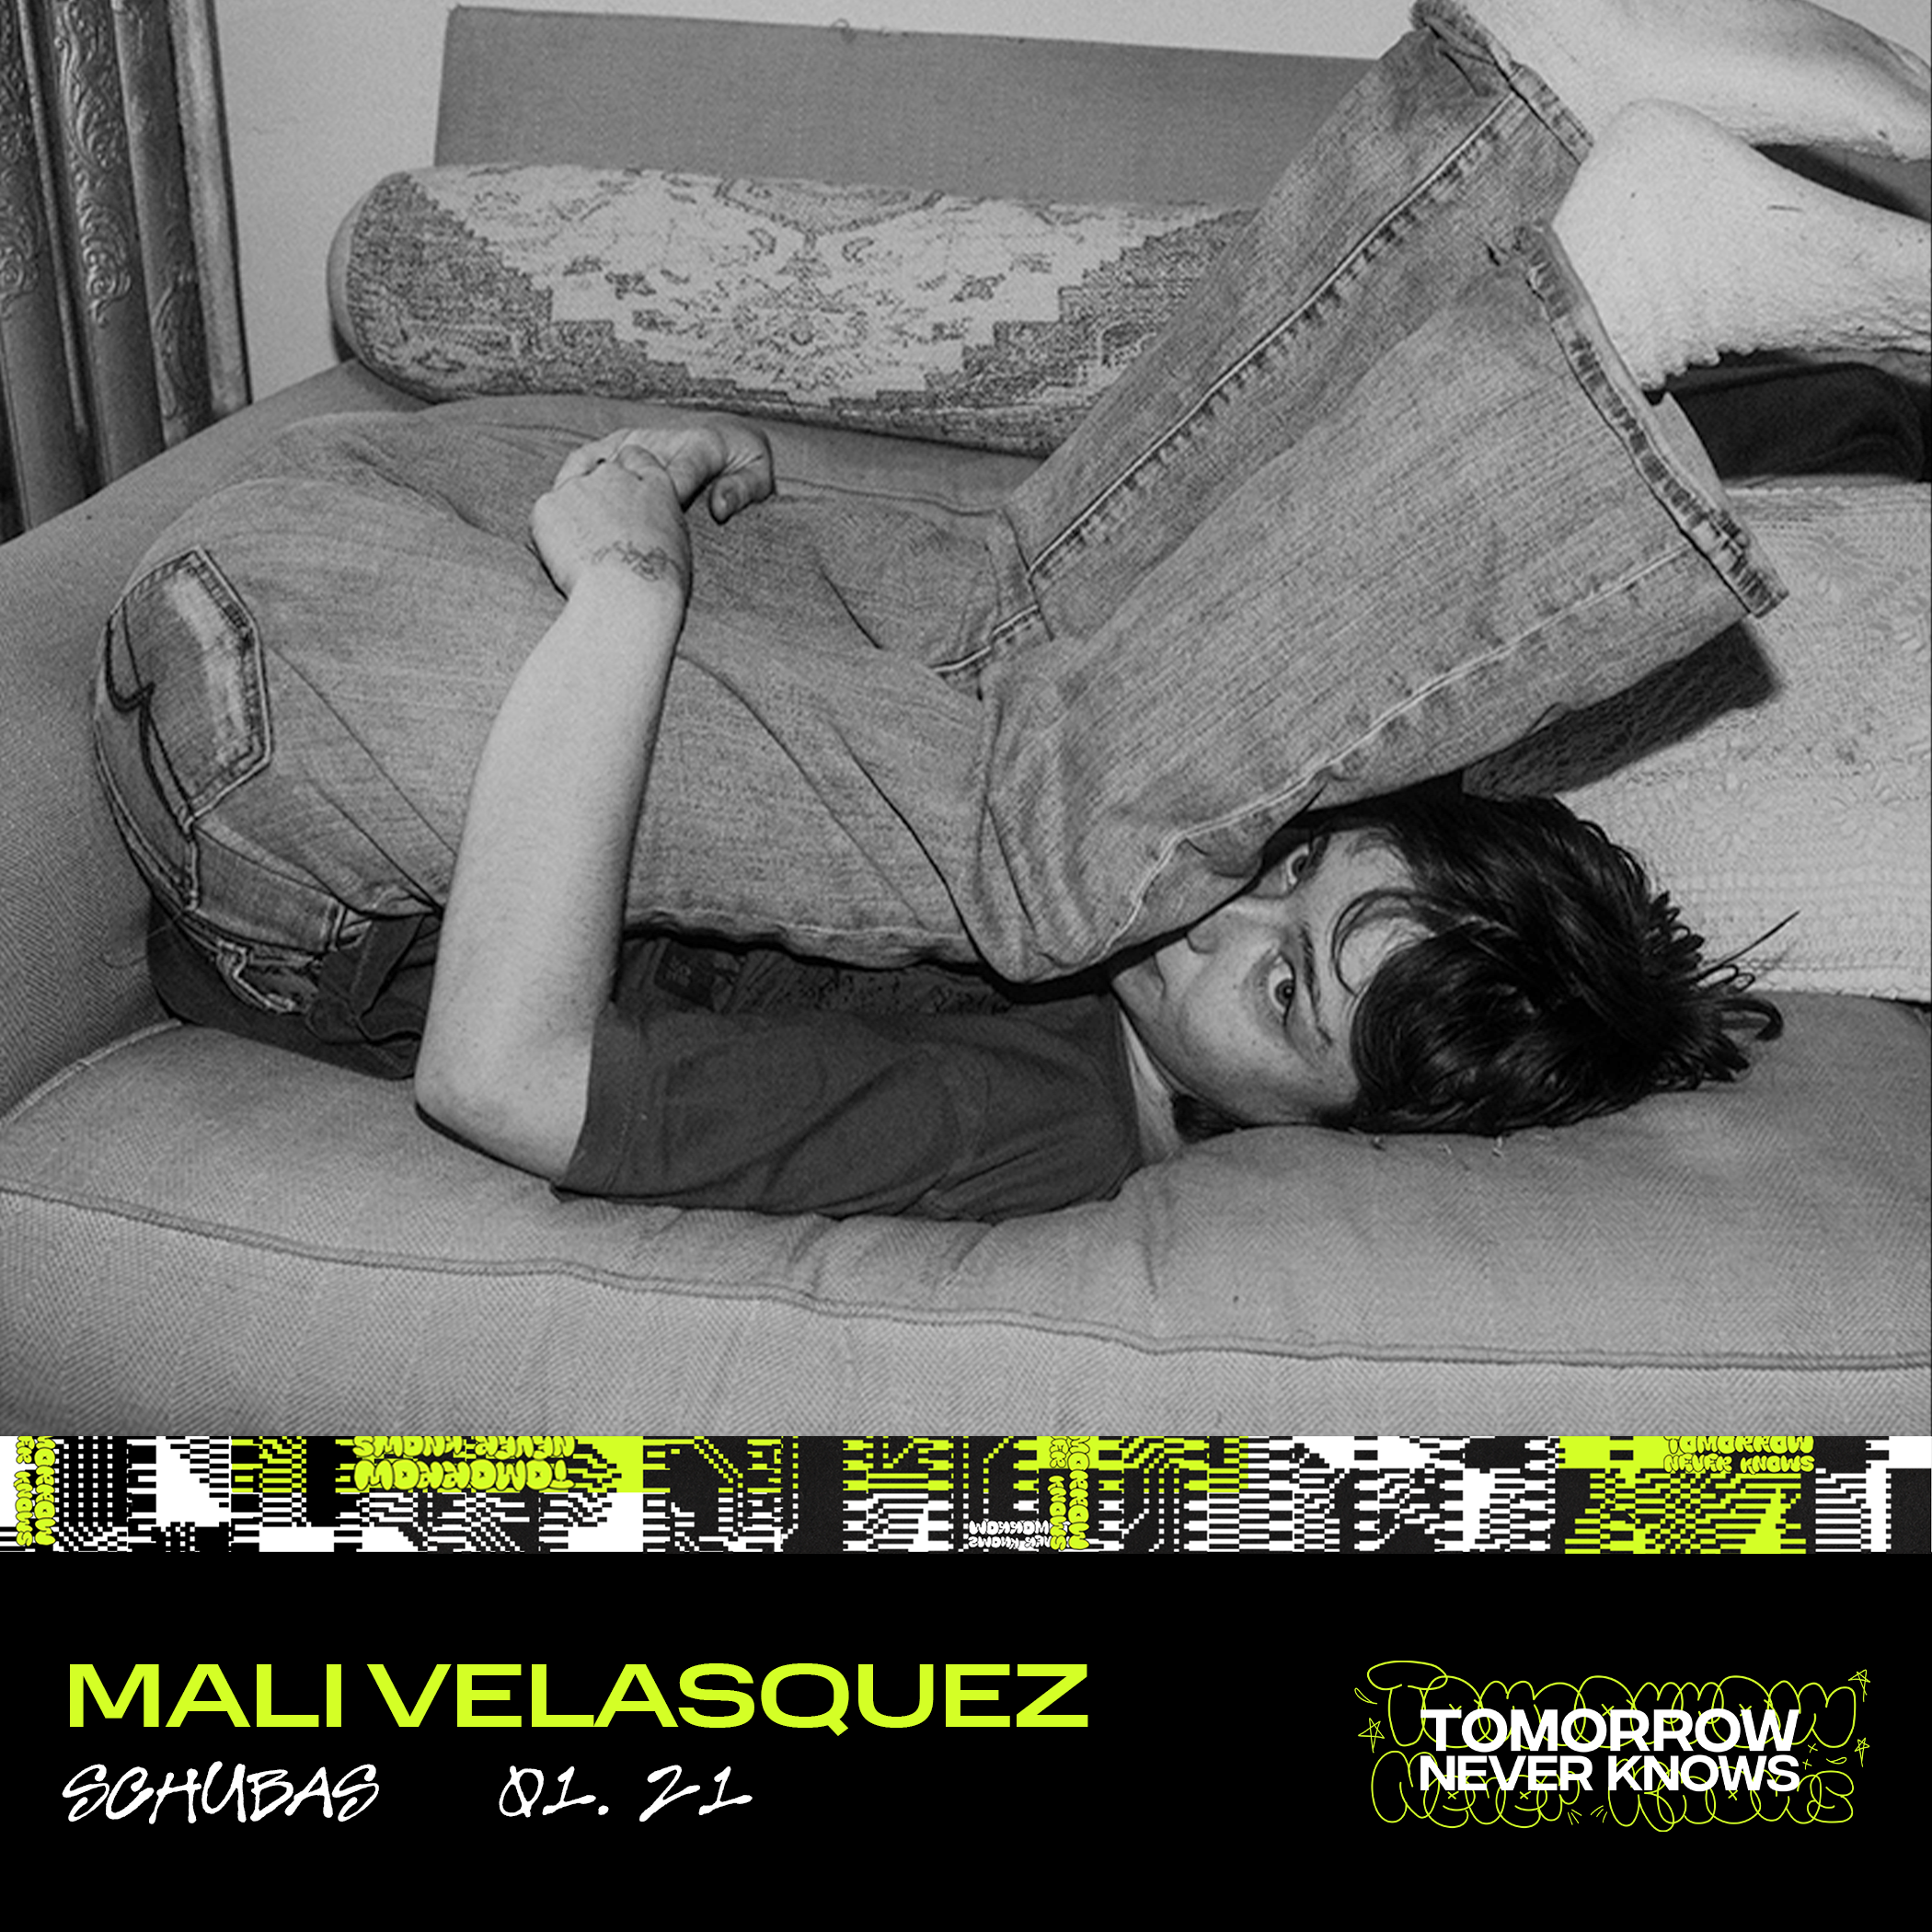 MALI VELASQUEZ (1).png